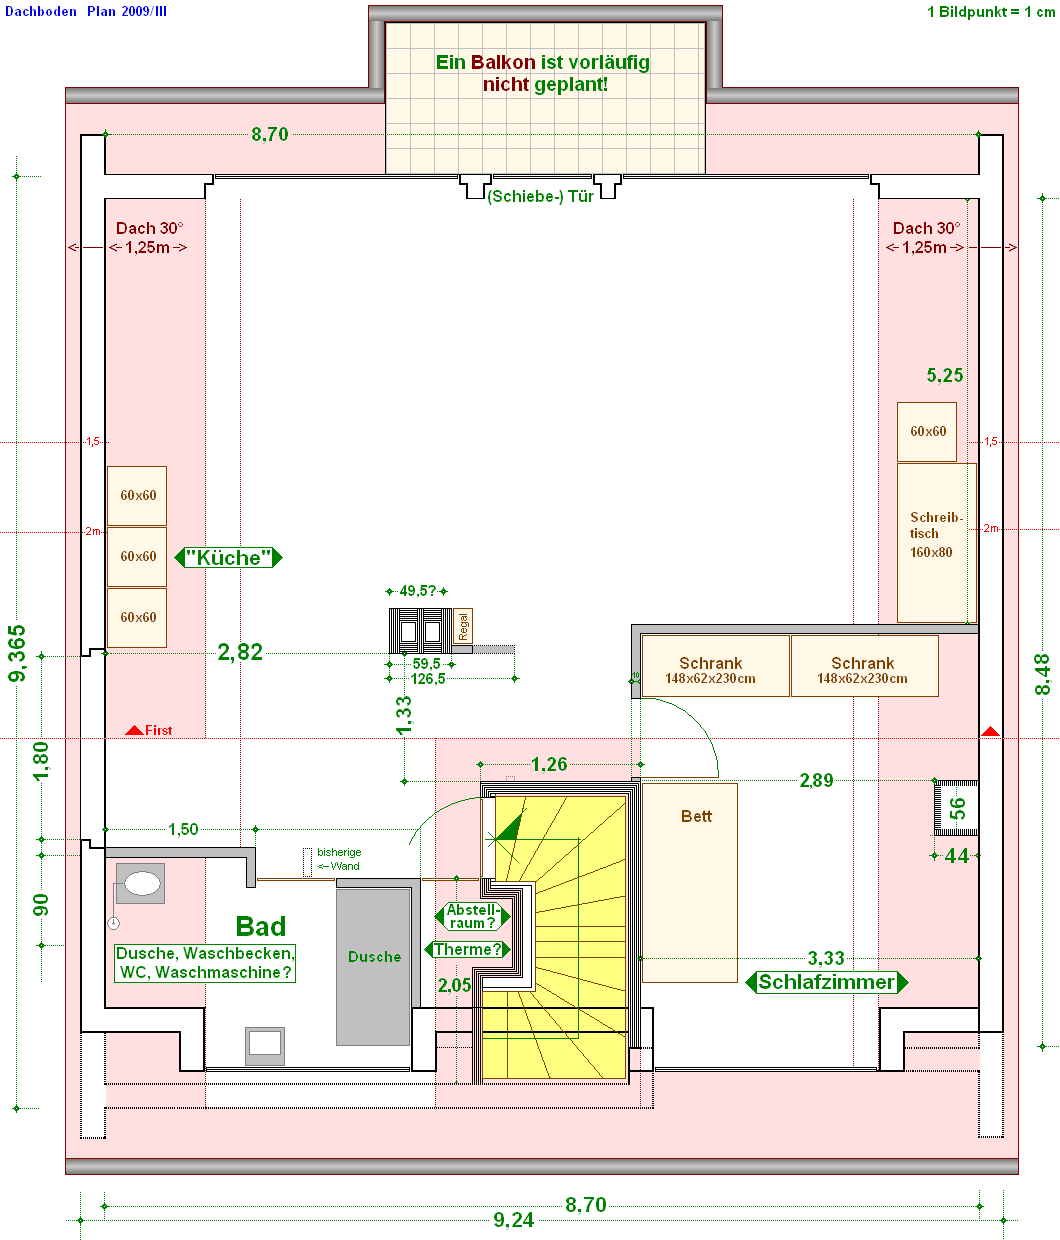 Siriusweg 20: Planung des Dachbodens (2009-III)